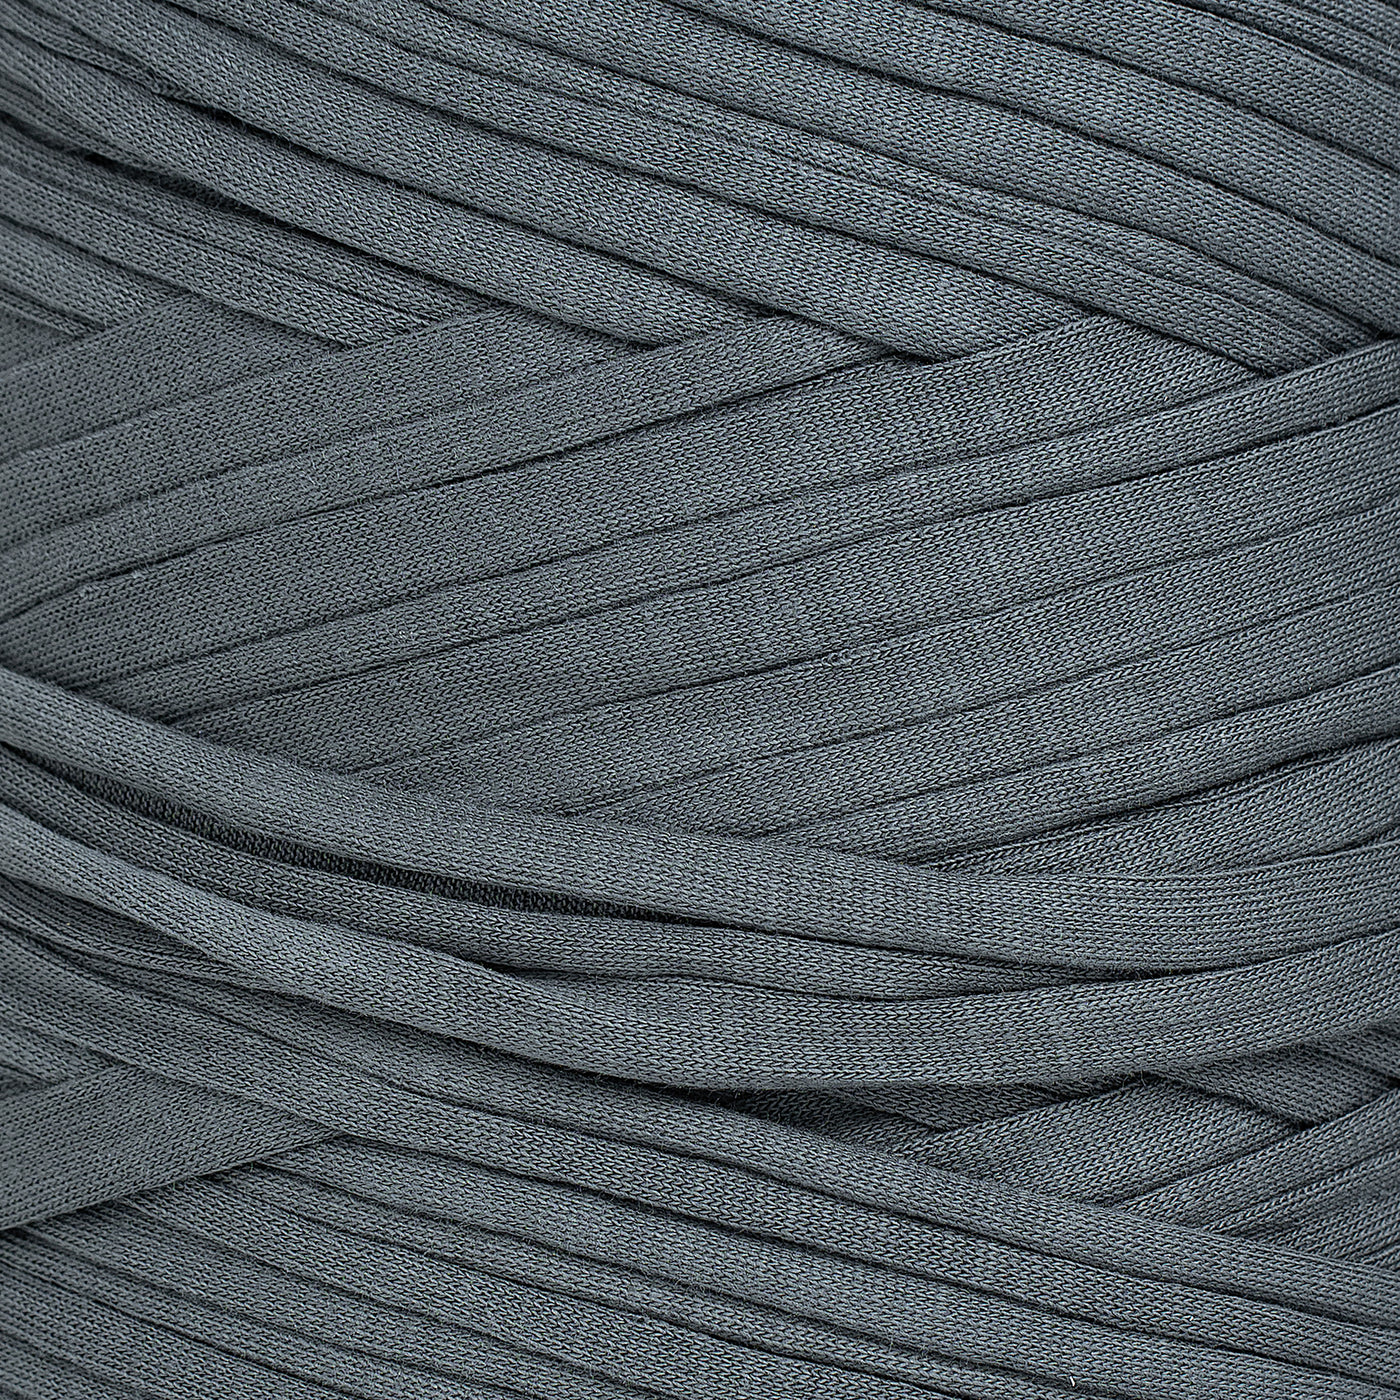 Recycled T-Shirt Fabric Yarn - Slate Gray Color